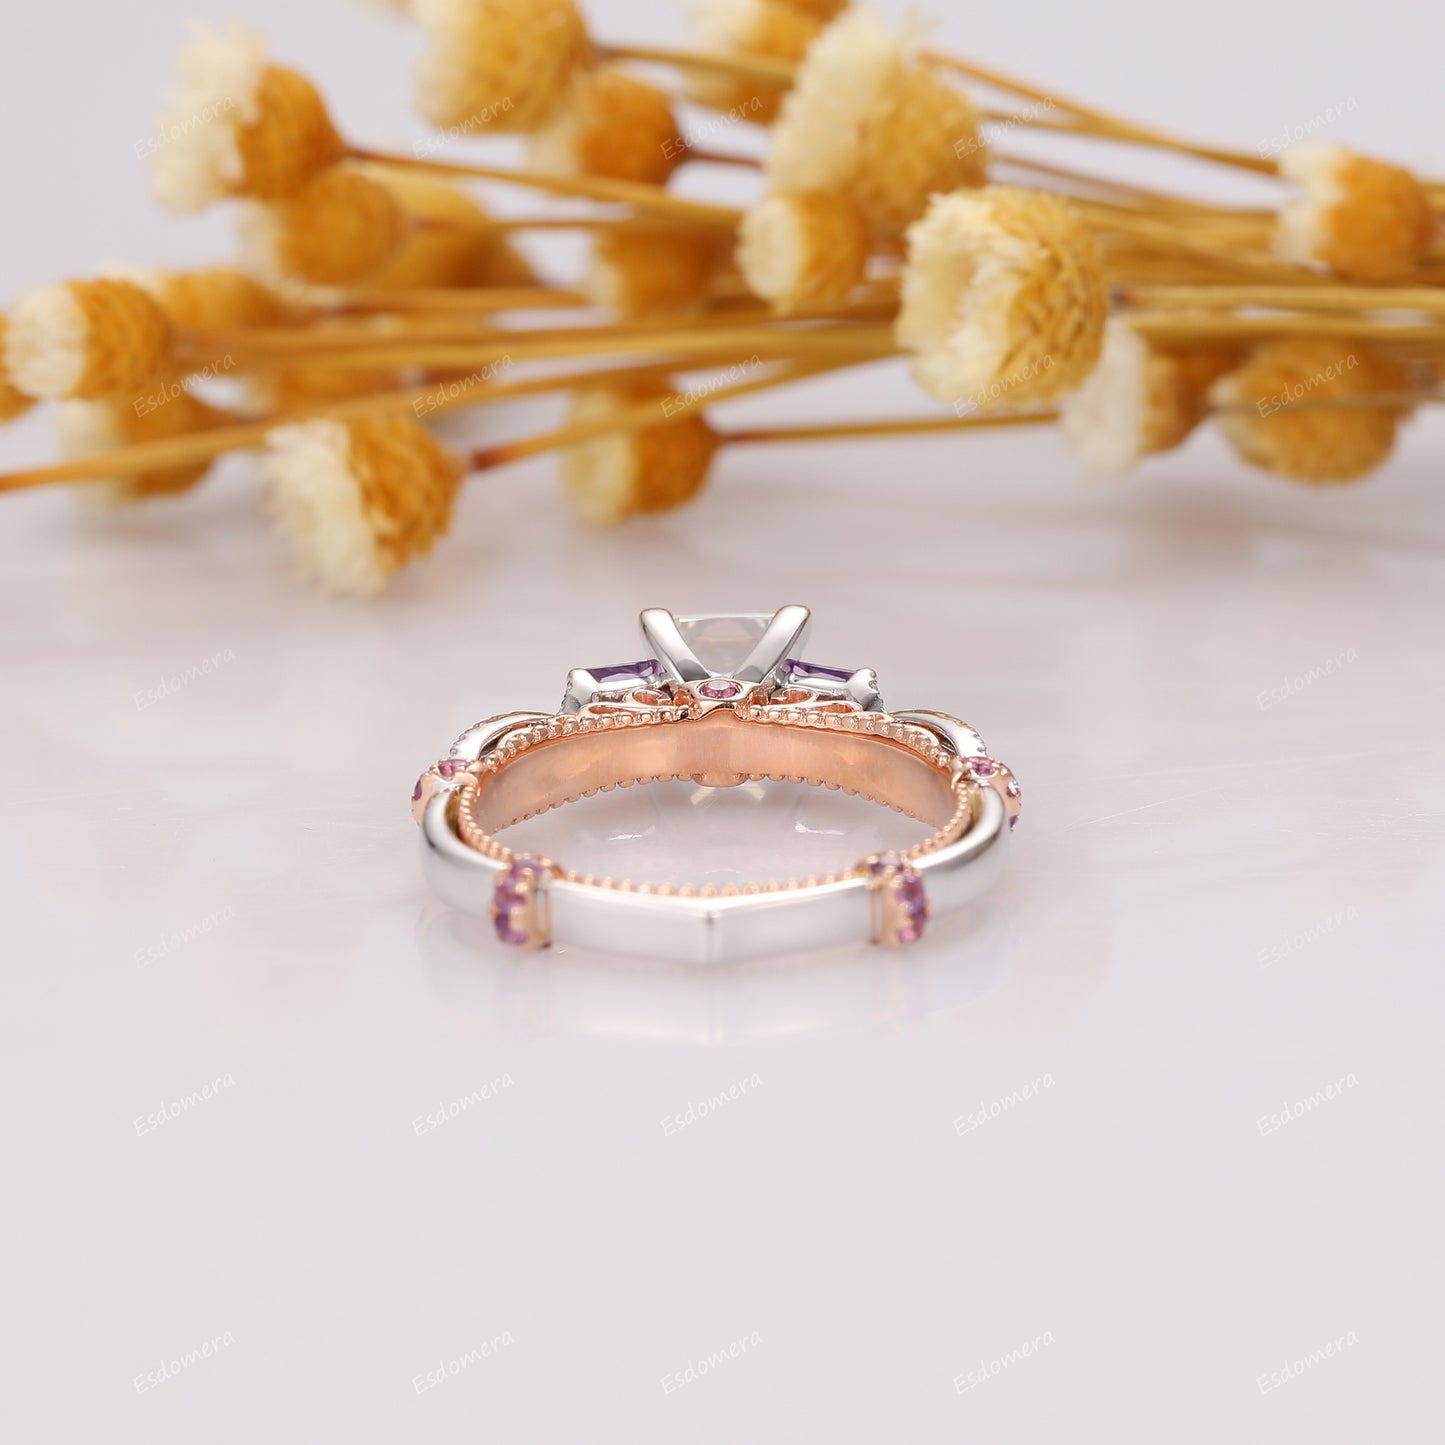 Vintage Two Tone Gold Moissanite Engagement Ring, Princess Cut 1CT Moissanite Bridal Ring